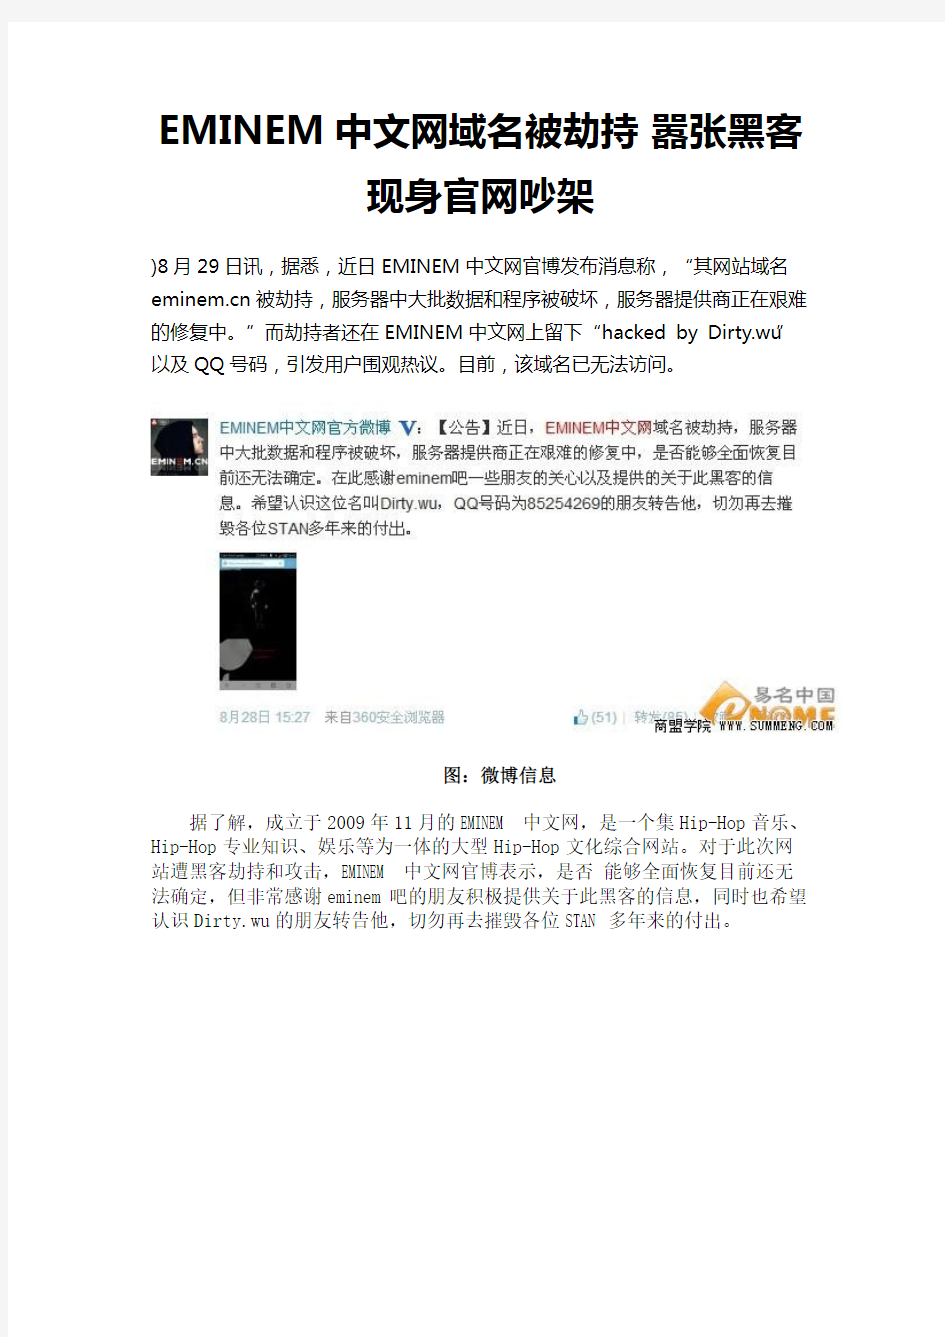 EMINEM中文网域名被劫持 嚣张黑客现身官网吵架